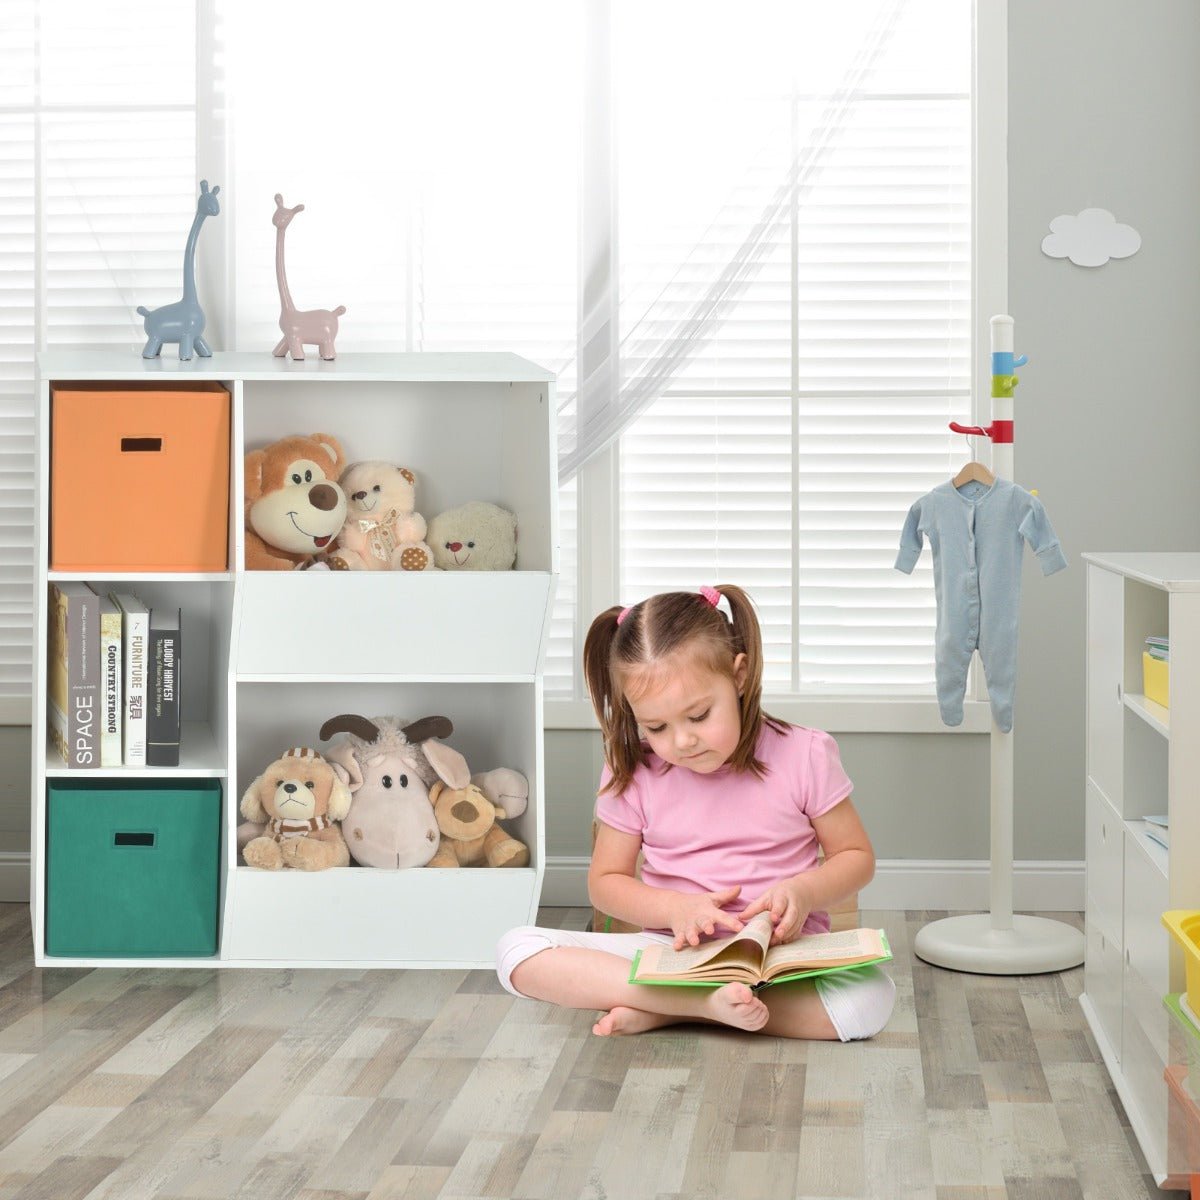 Child-Safe Toy Storage - 2 Baskets for Organizing Kid’s Room